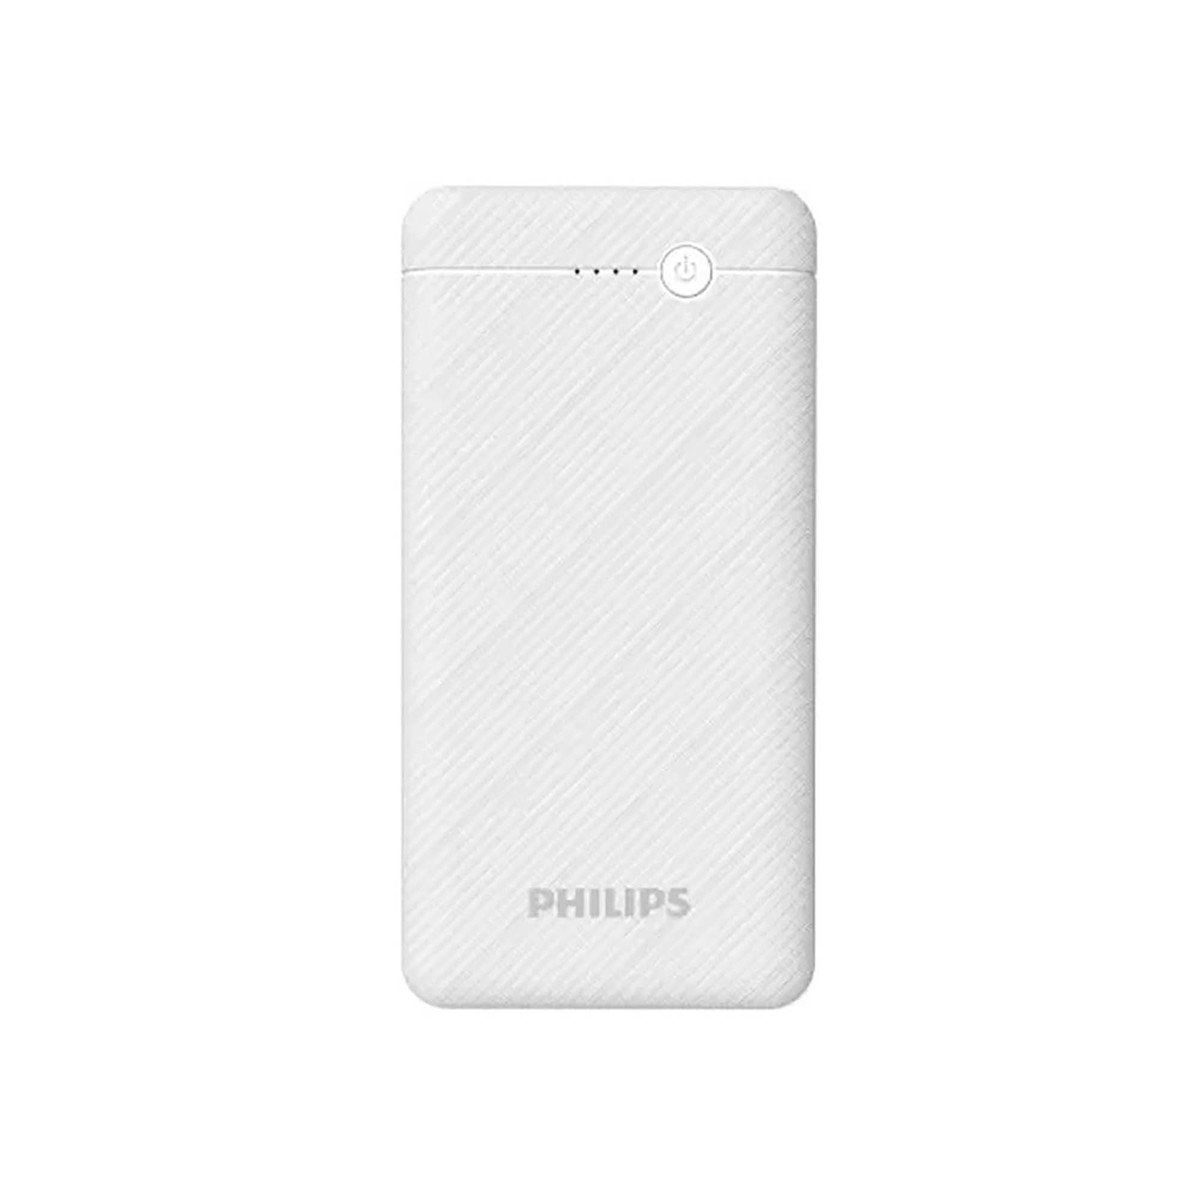 Philips 10000 MAh Power Bank Ultra Compact,White